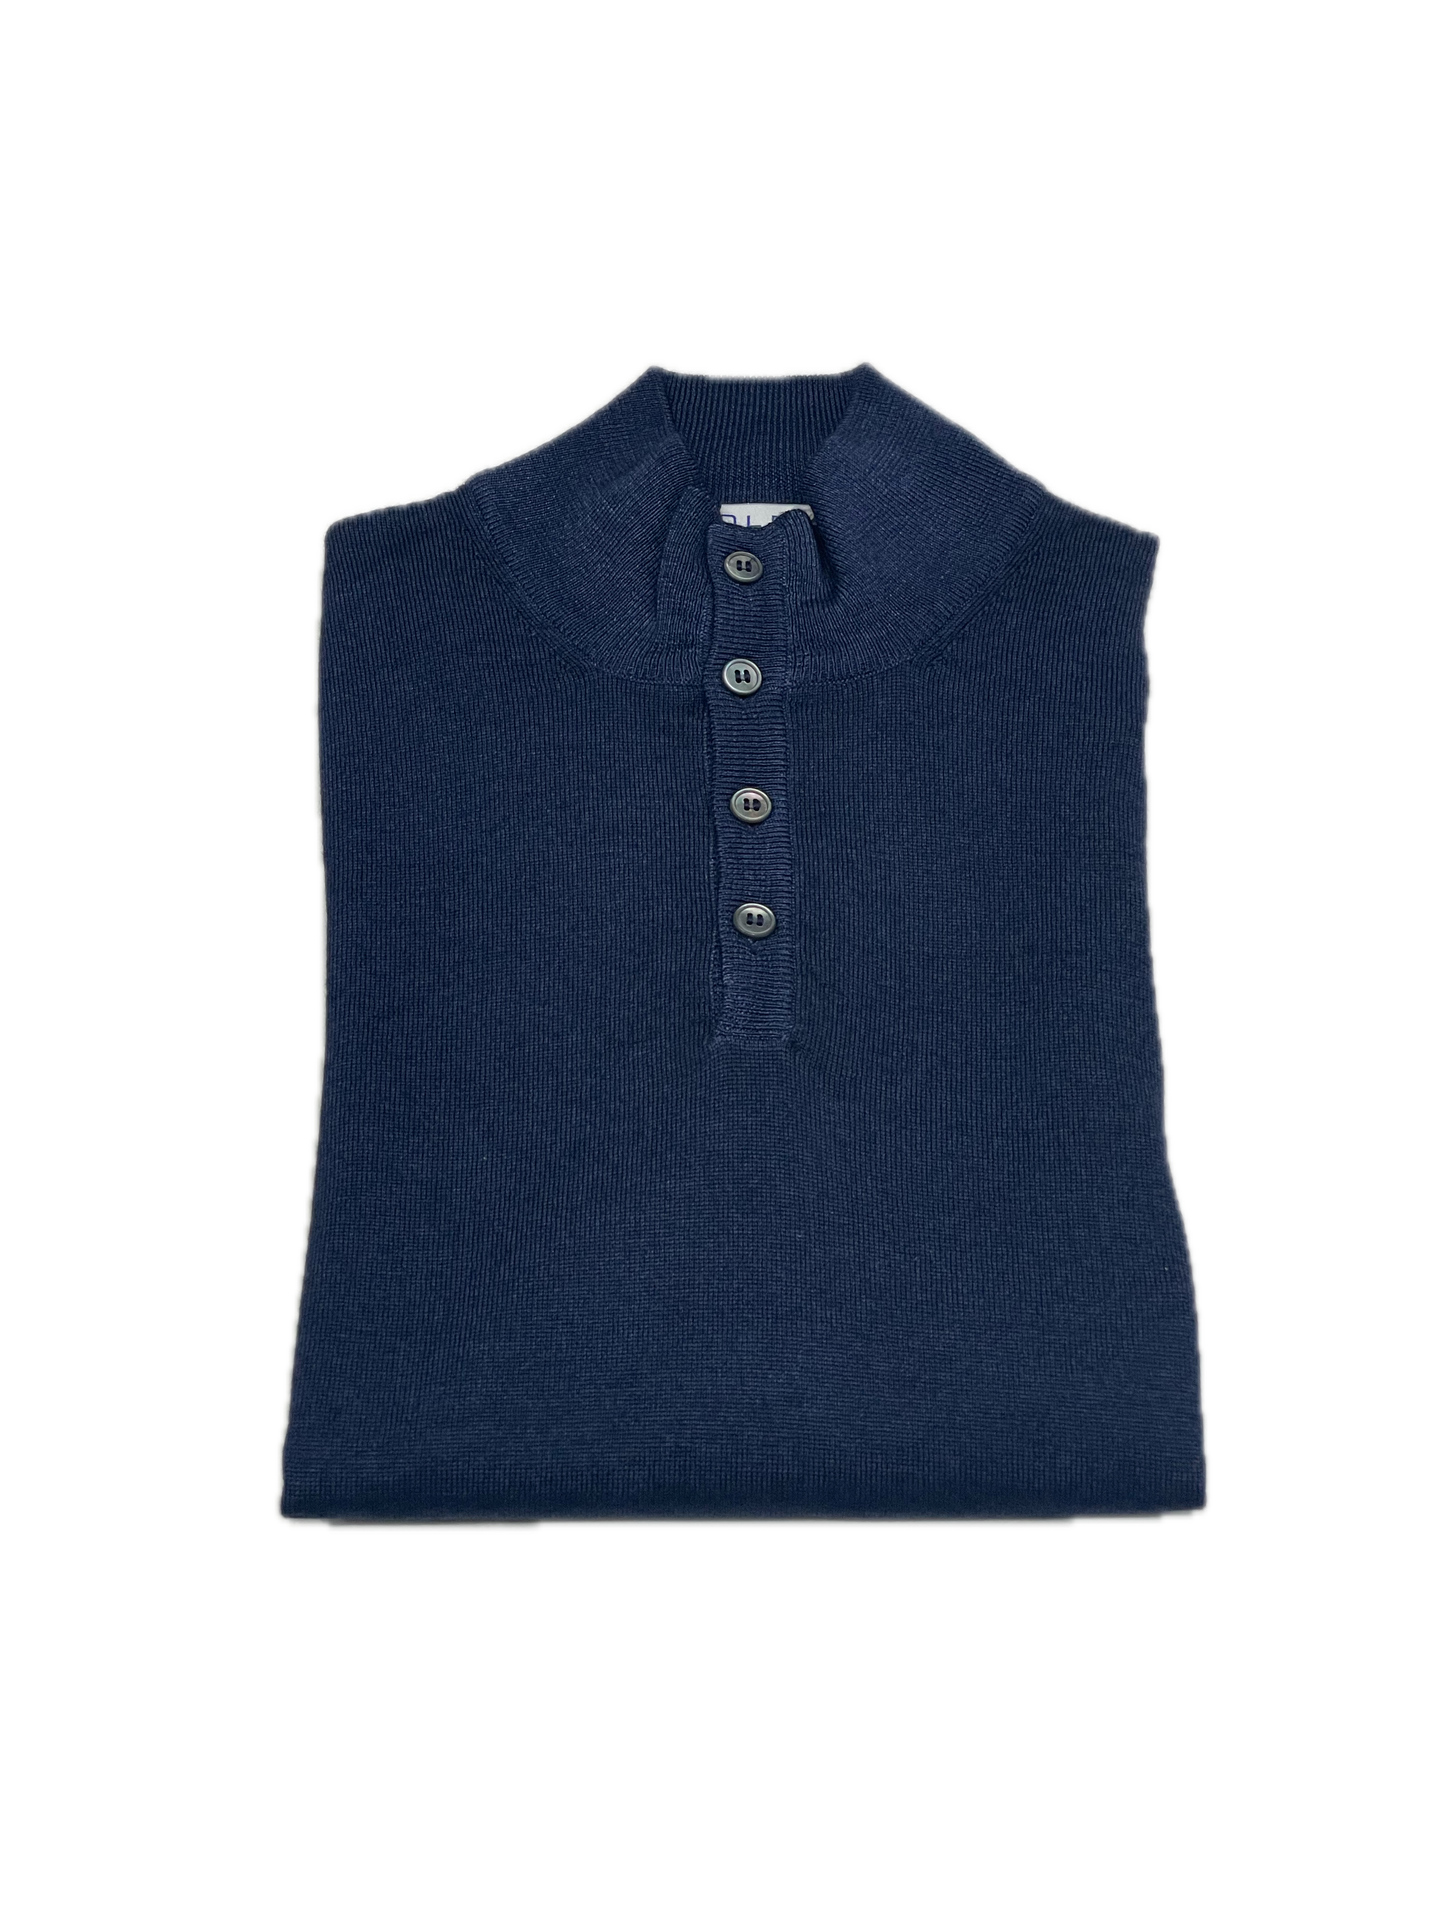 Button neck pullover in Navy Blue vintage merino wool